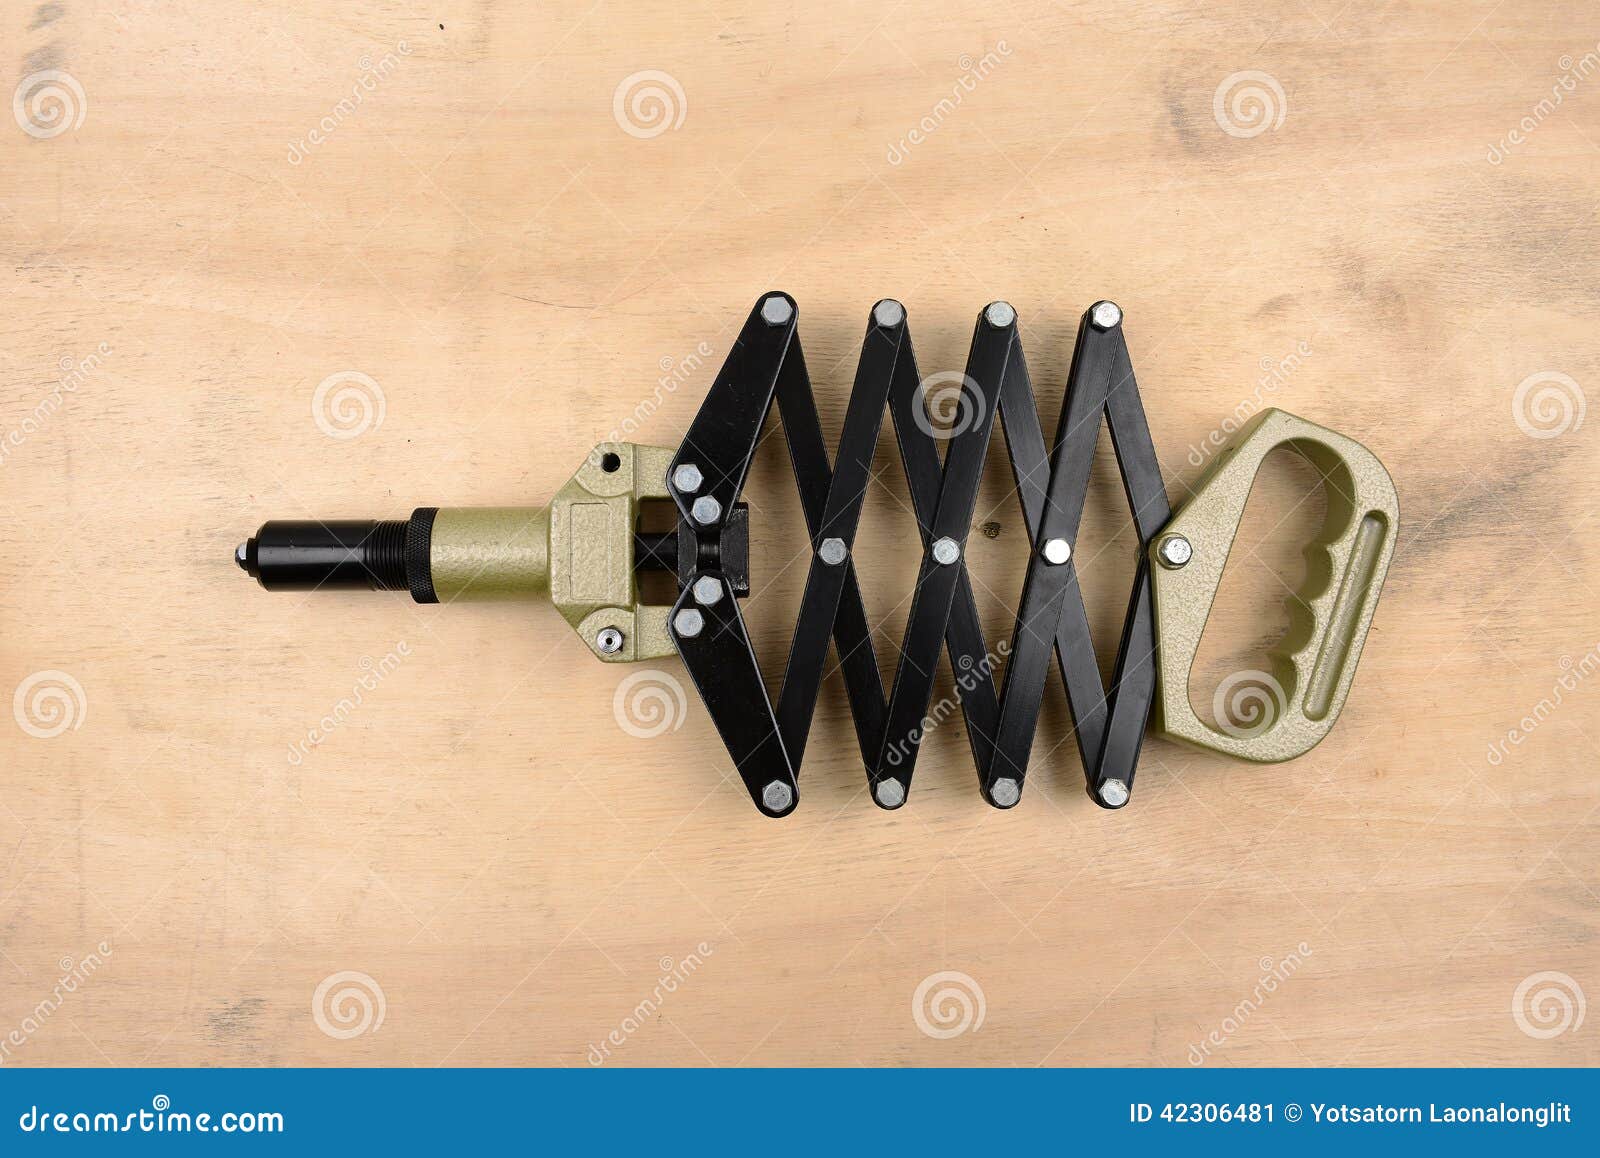 Pop Rivet Gun, Wrench And Pop Rivets Stock Image - Image ...